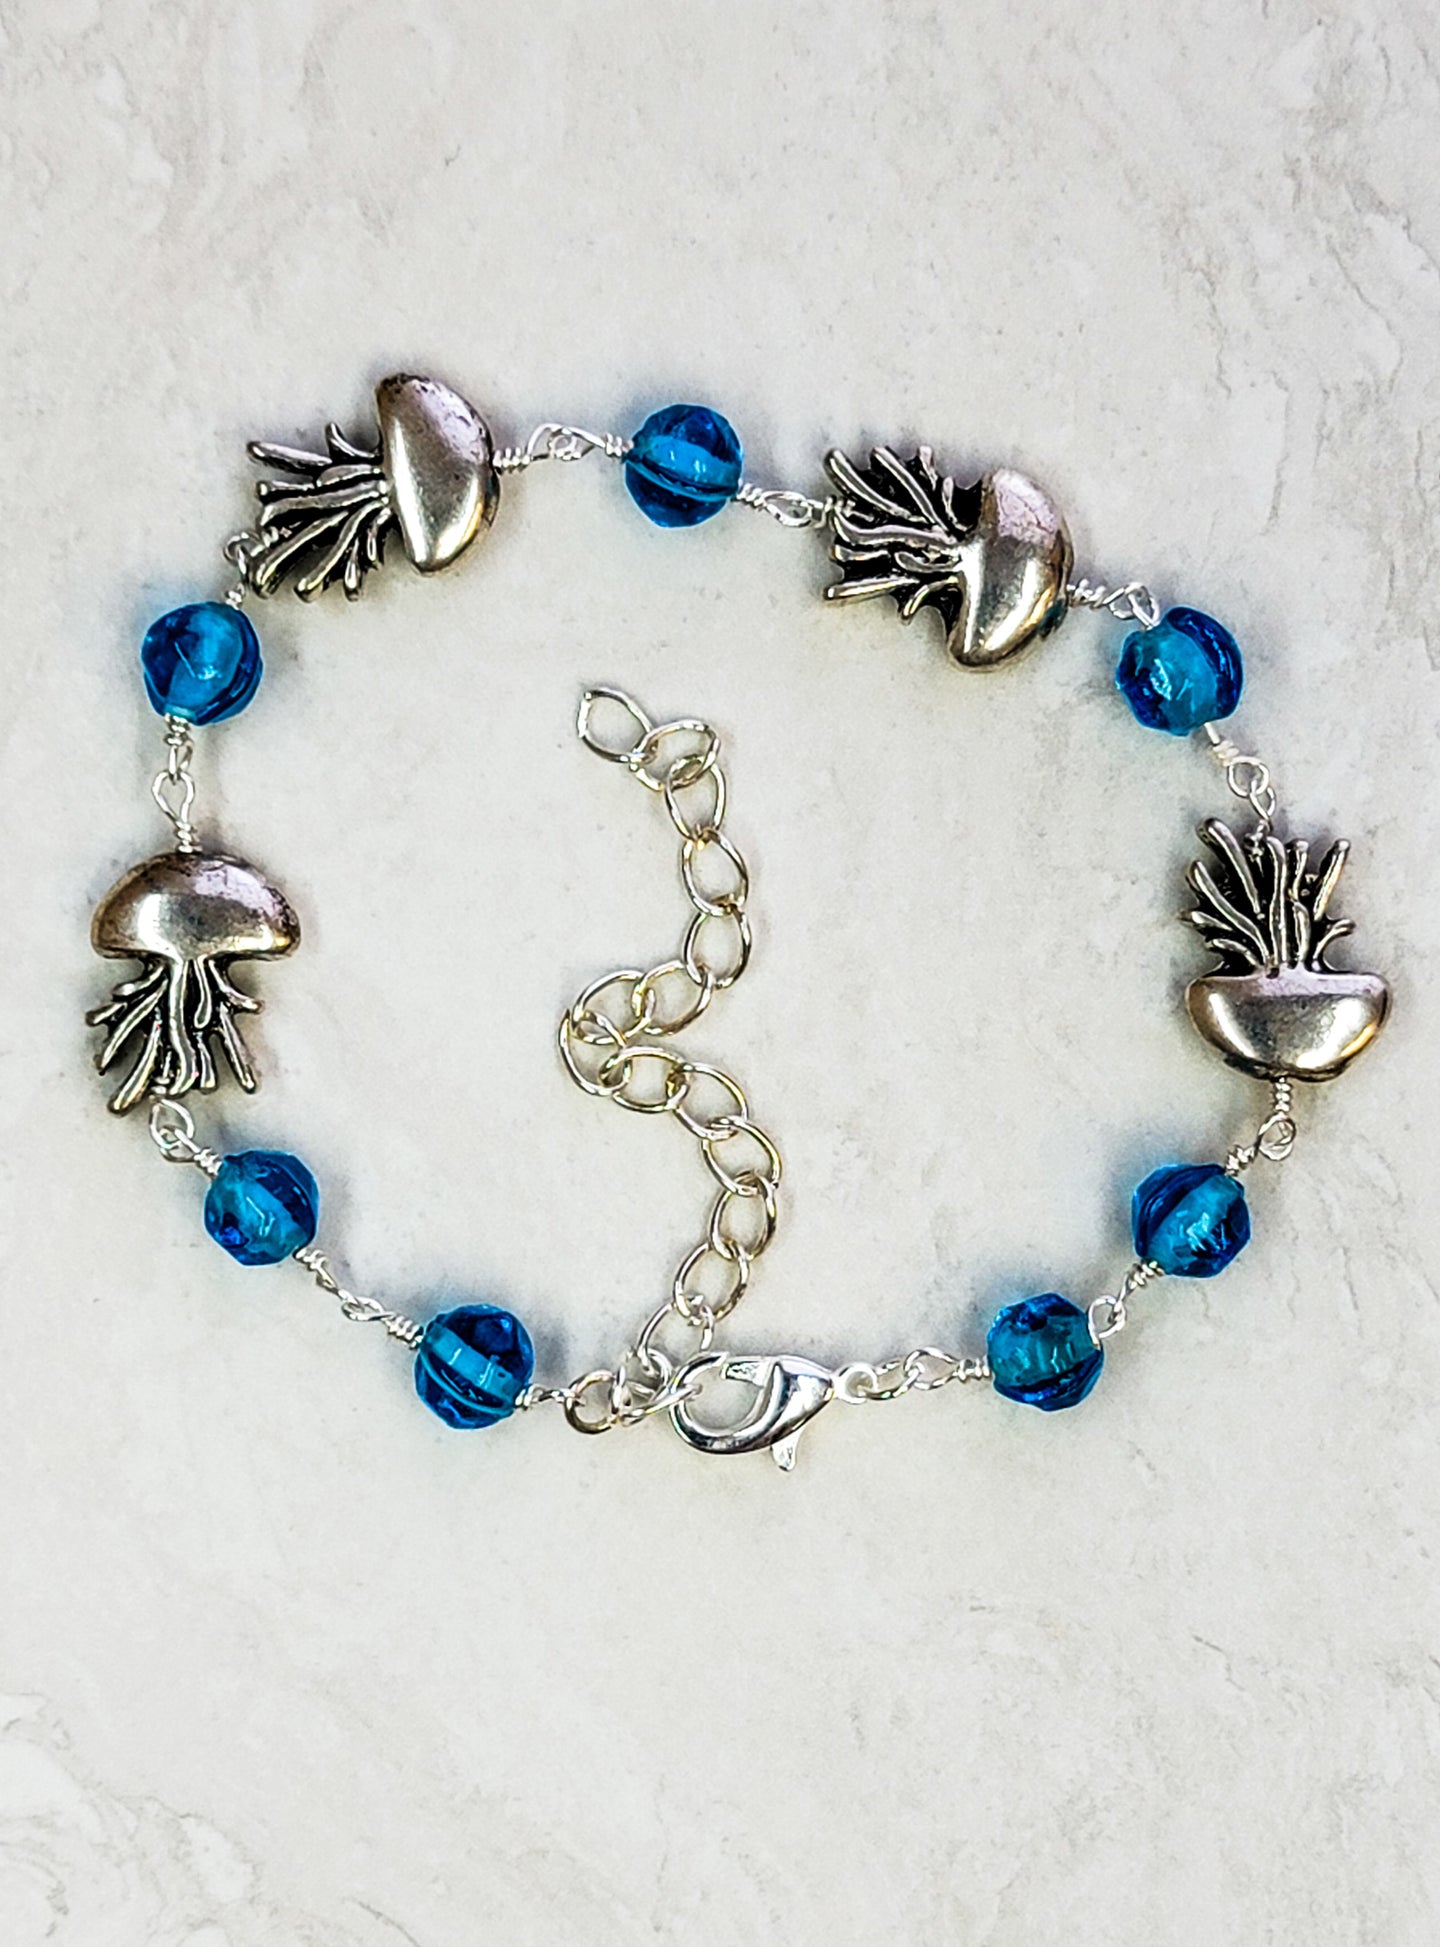 Blue & Silver Jellyfish Bracelet - Adjustable Lobster Clasp - One Of A Kind